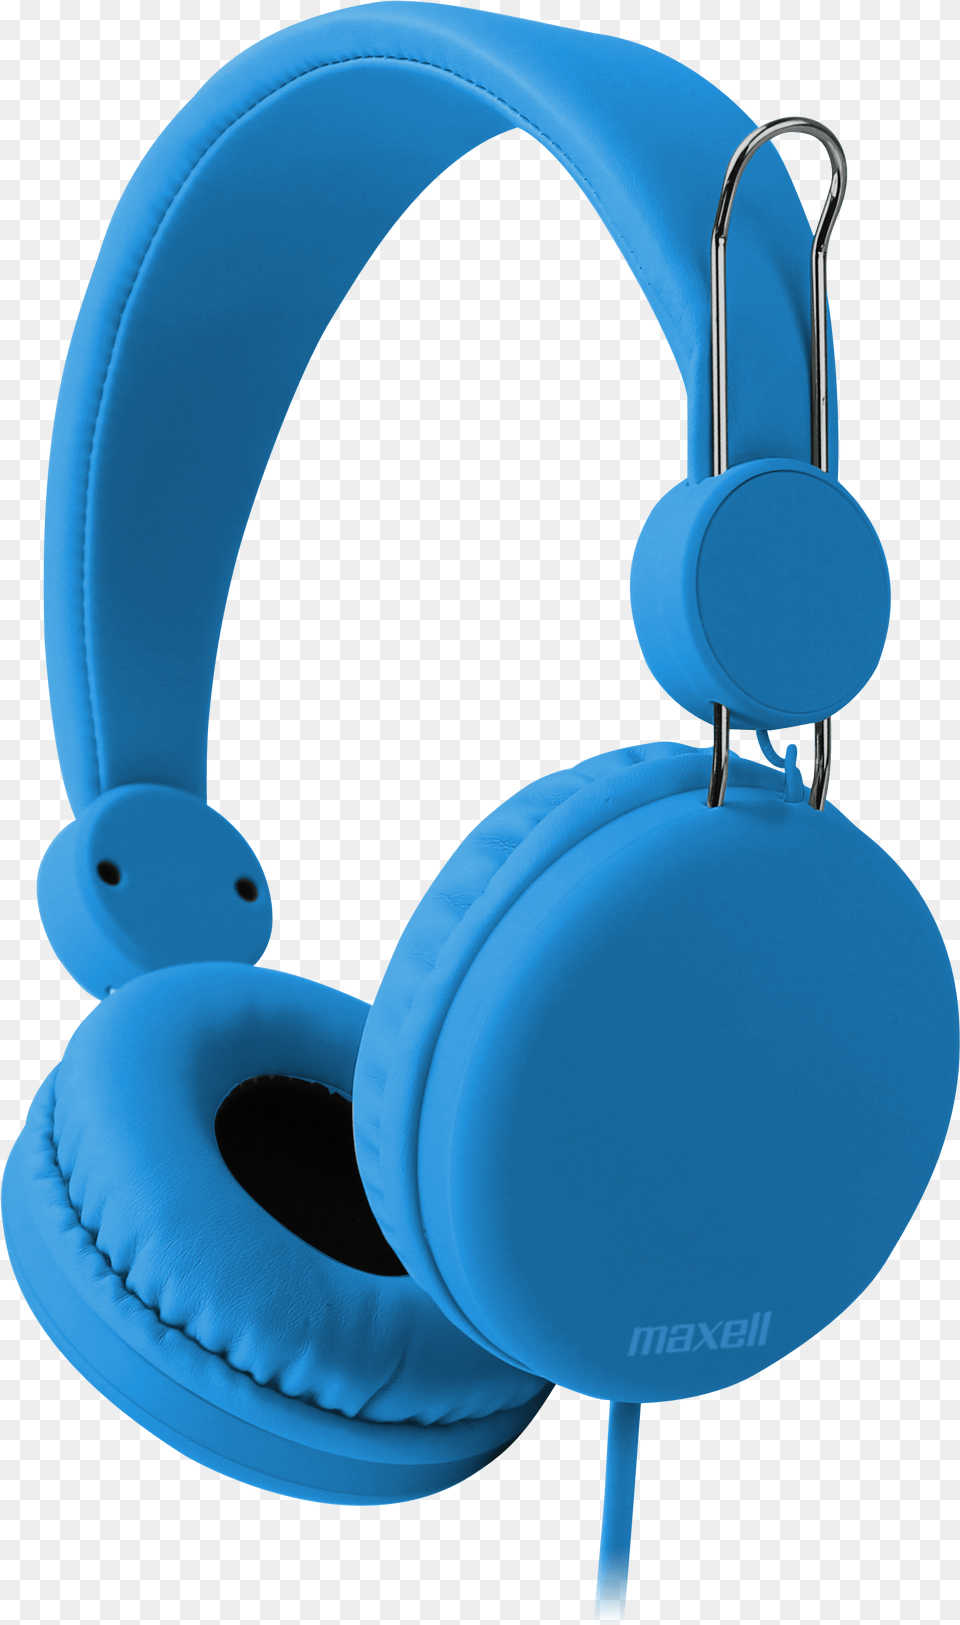 Maxell Headphones, Electronics Png Image